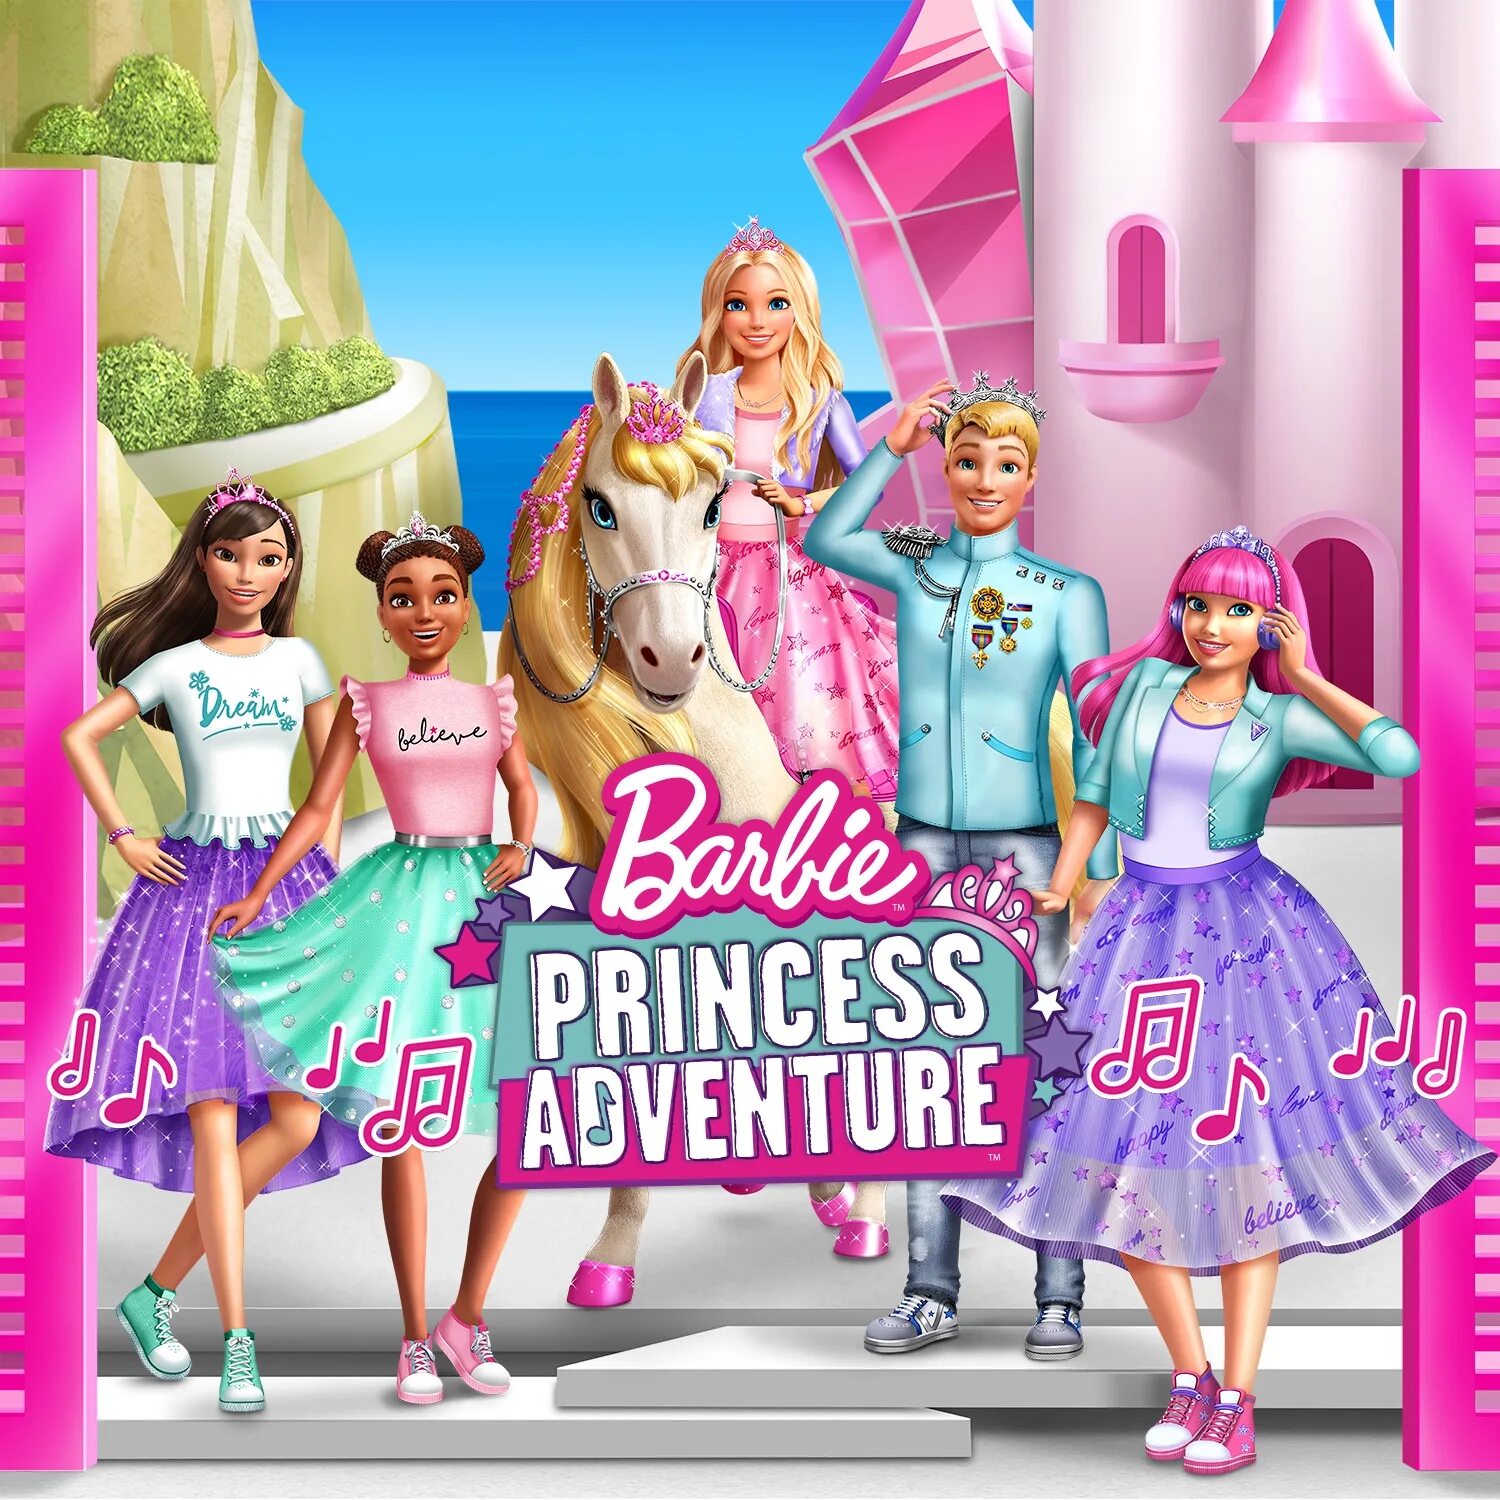 Барби приключения принцессы 2020. Барби Princess Adventure. Барби Нетфликс. Приключения принцессы 2020